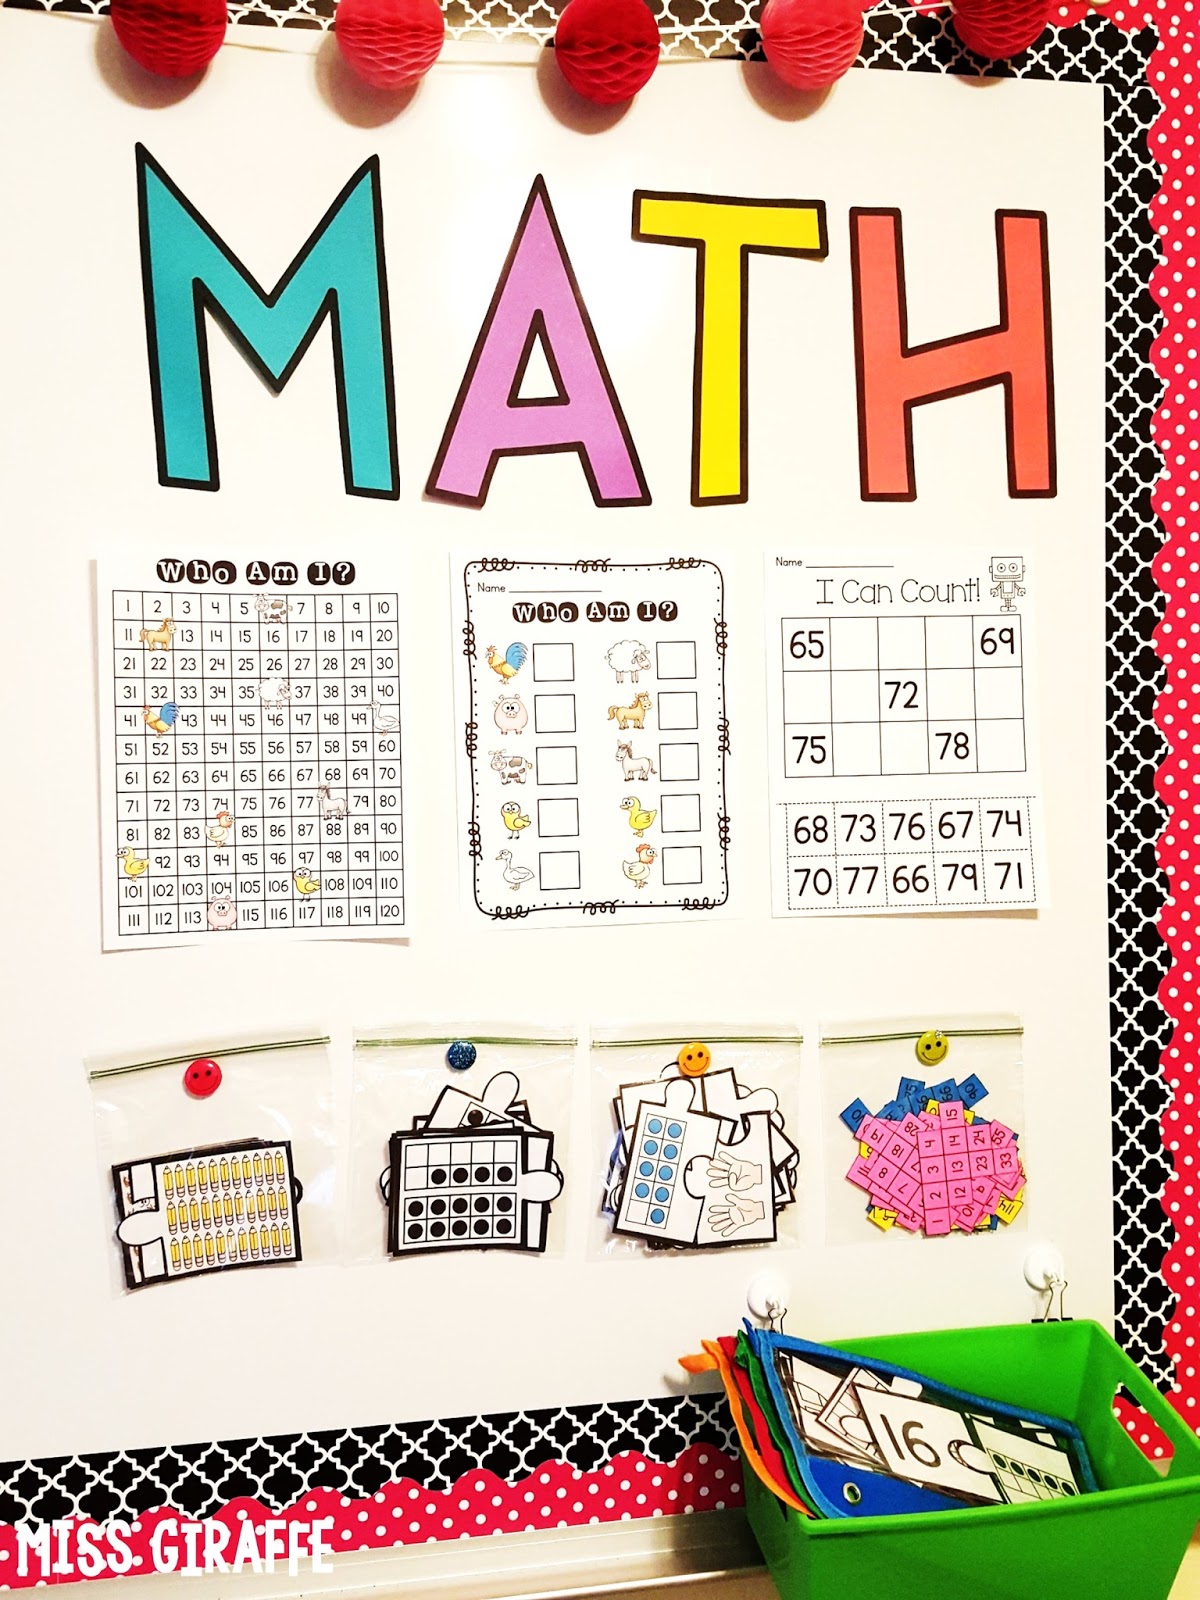 Miss Giraffe's Class: DIY Classroom Decor Bulletin Board Letters